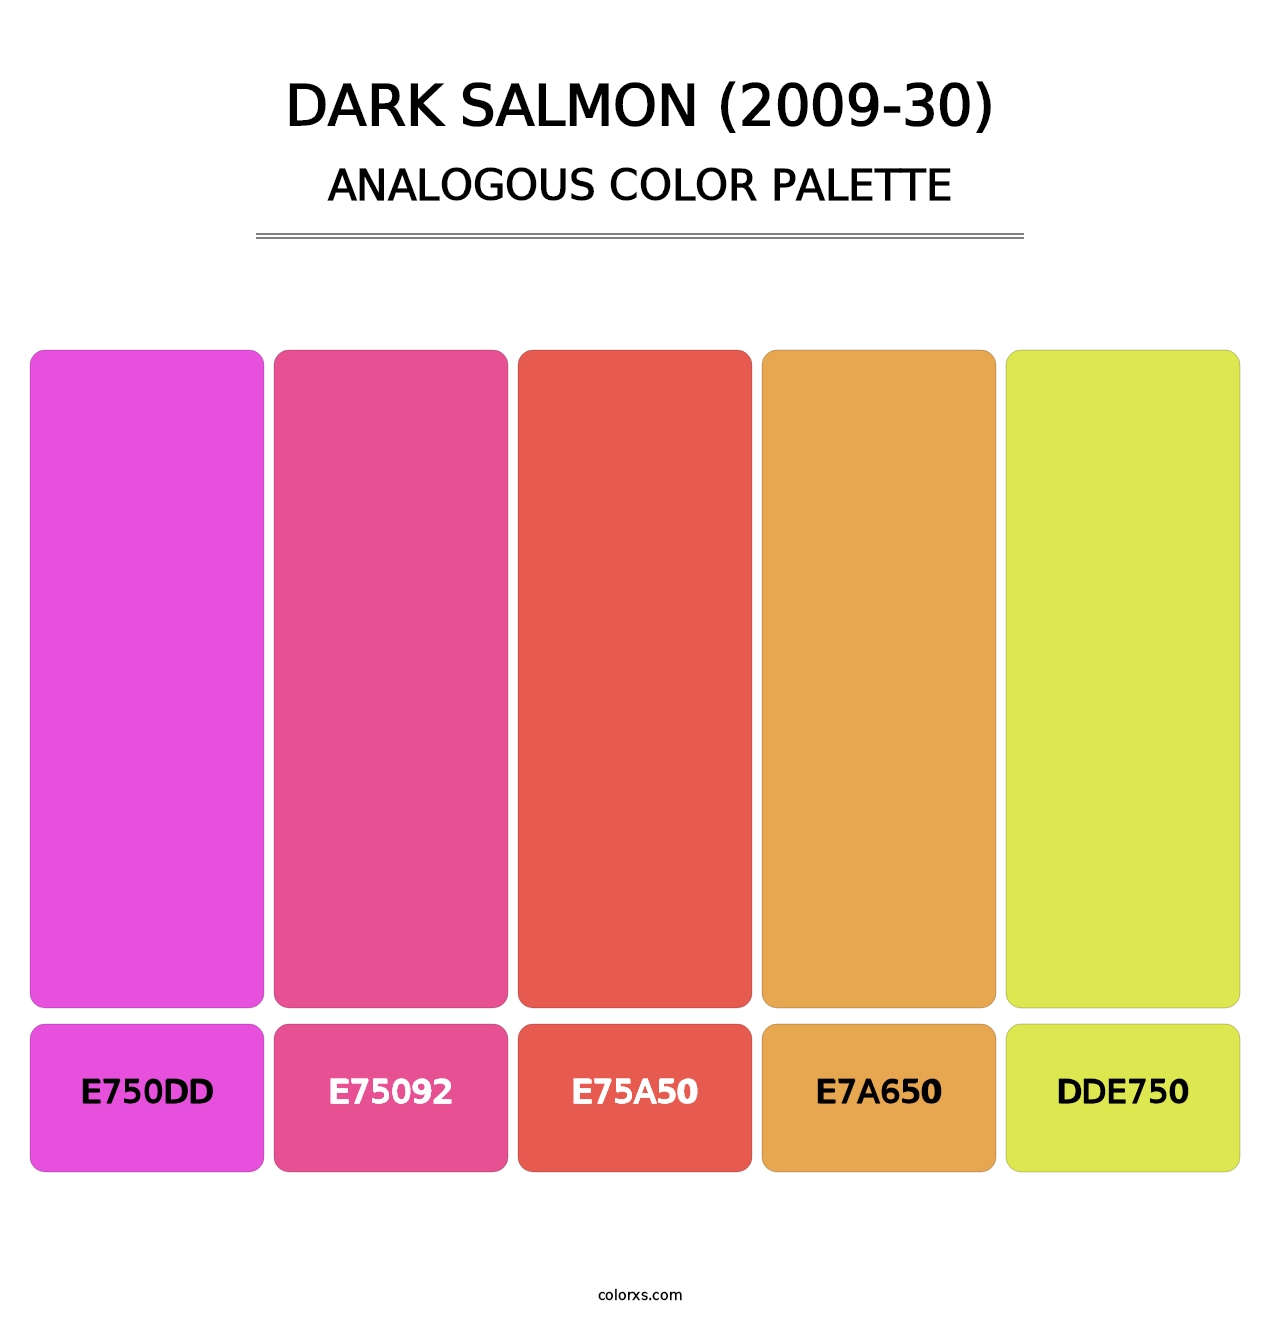 Dark Salmon (2009-30) - Analogous Color Palette